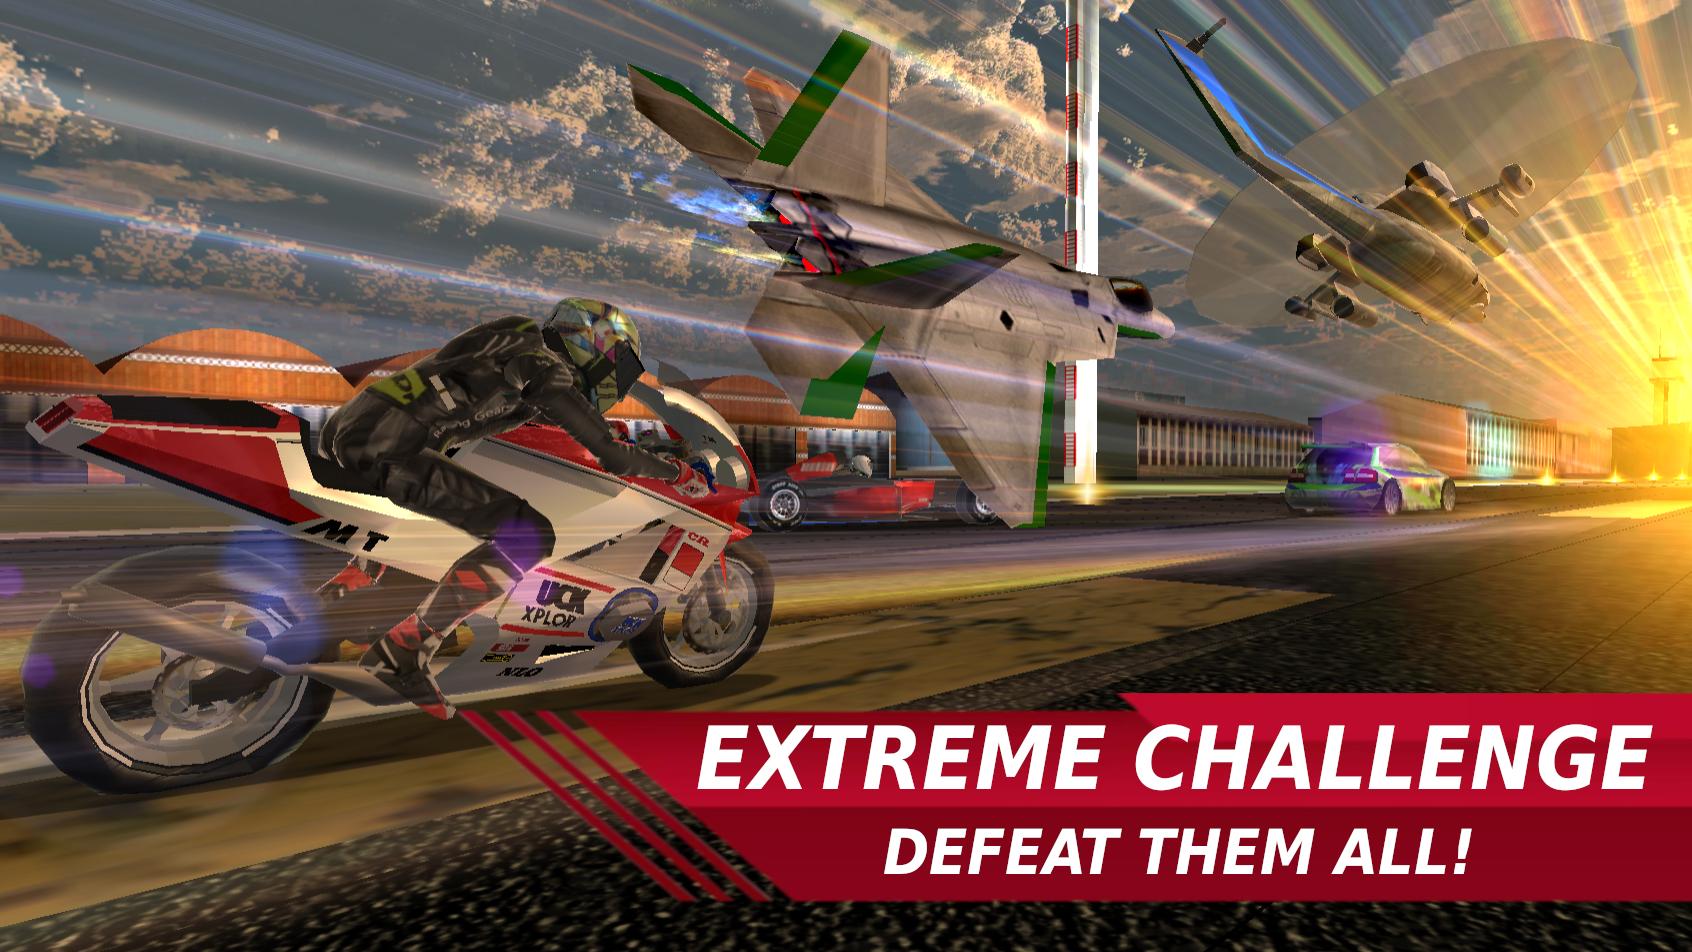 Rebel Gears Drag Bike Racing / CSR Race Moto Game 1.3.2 Screenshot 23